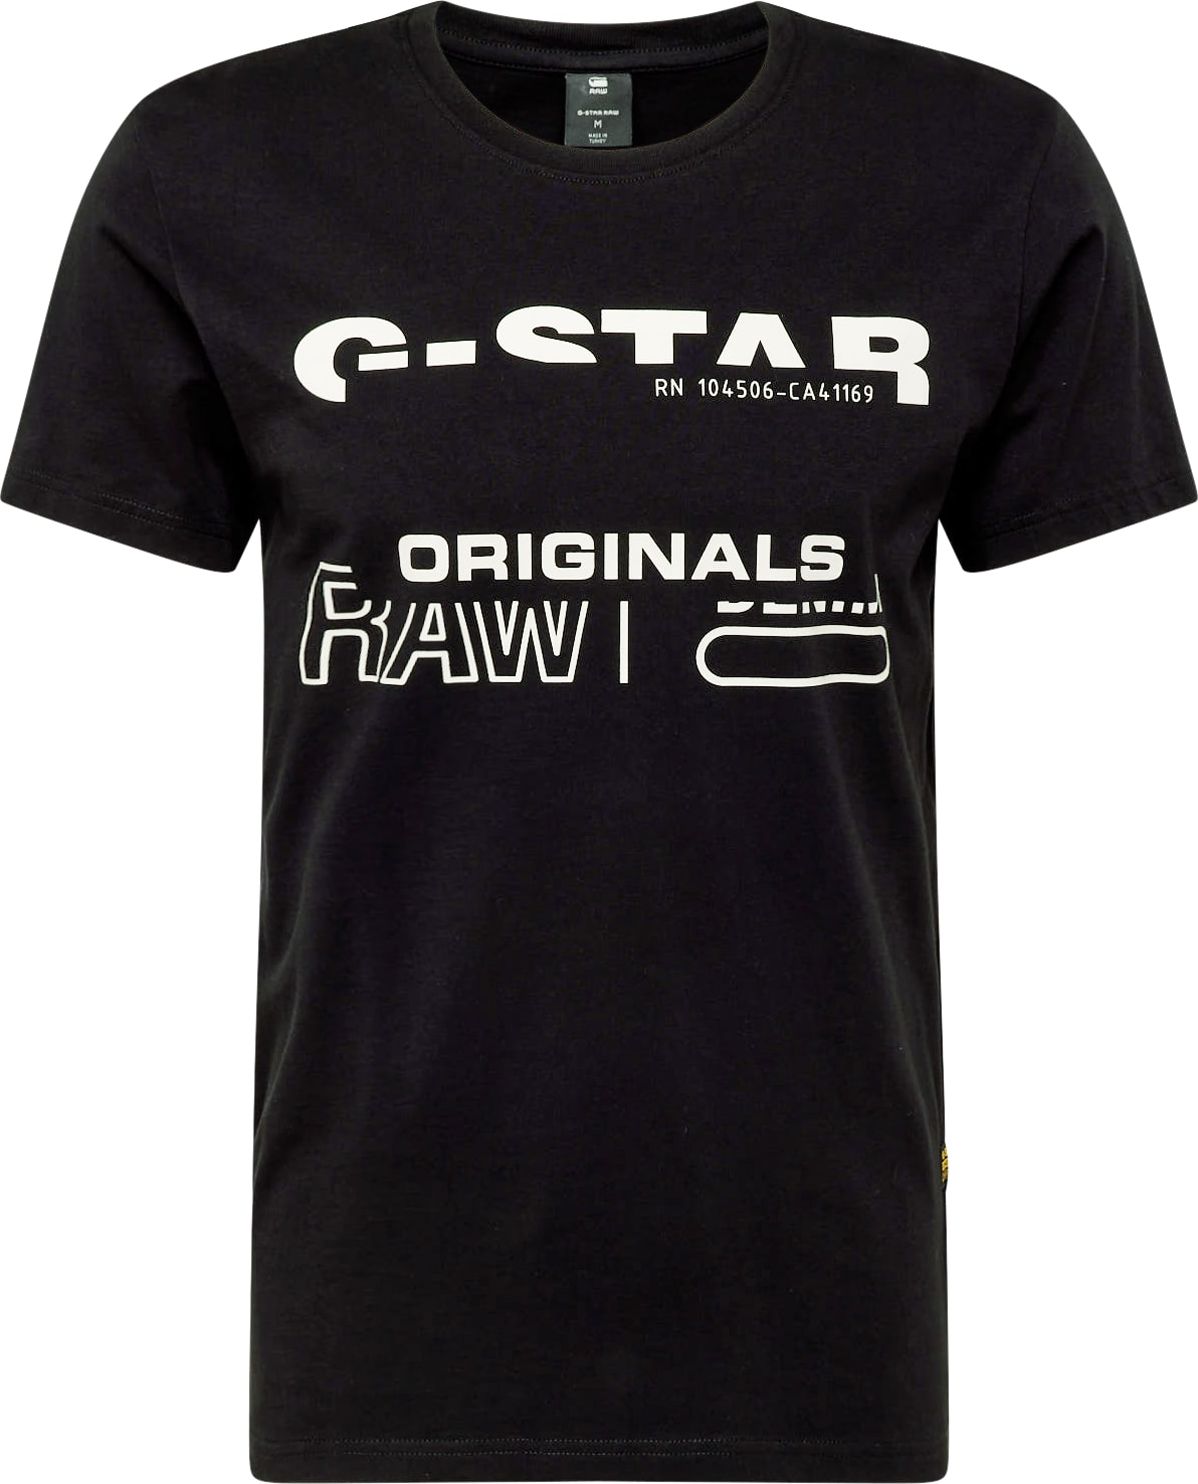 Tričko 'Originals r t' G-Star Raw černá / bílá